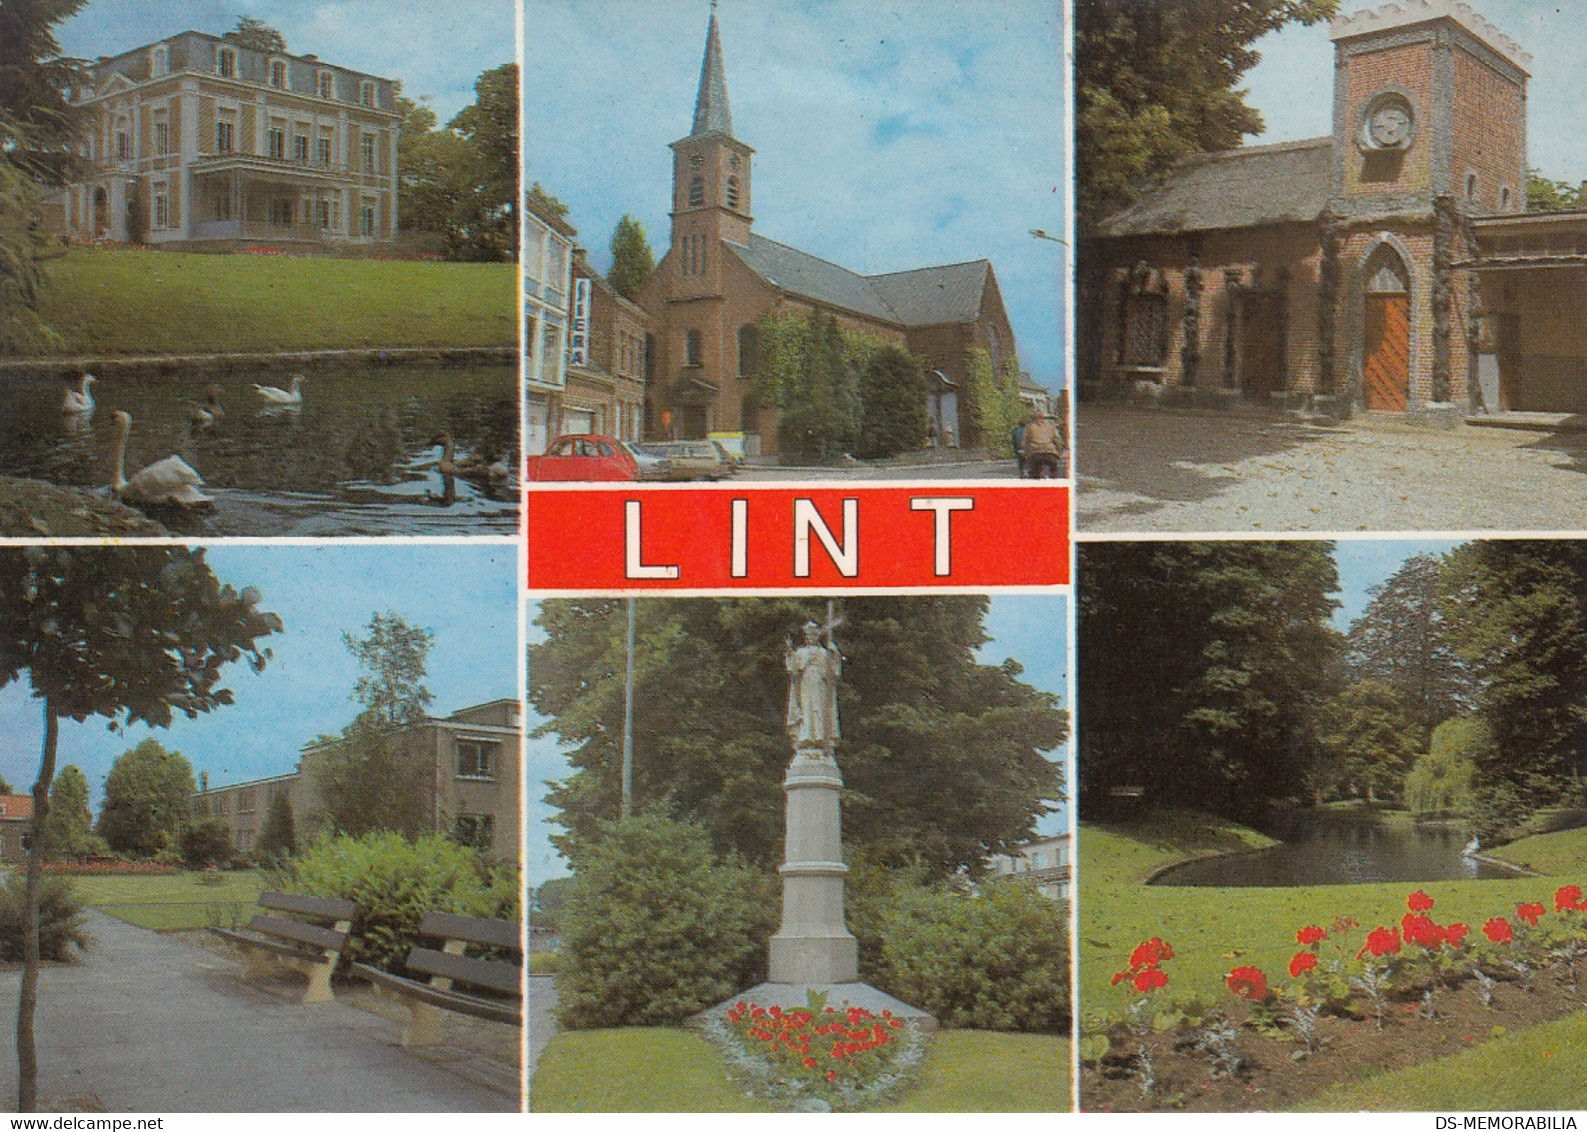 Lint 1983 - Lint